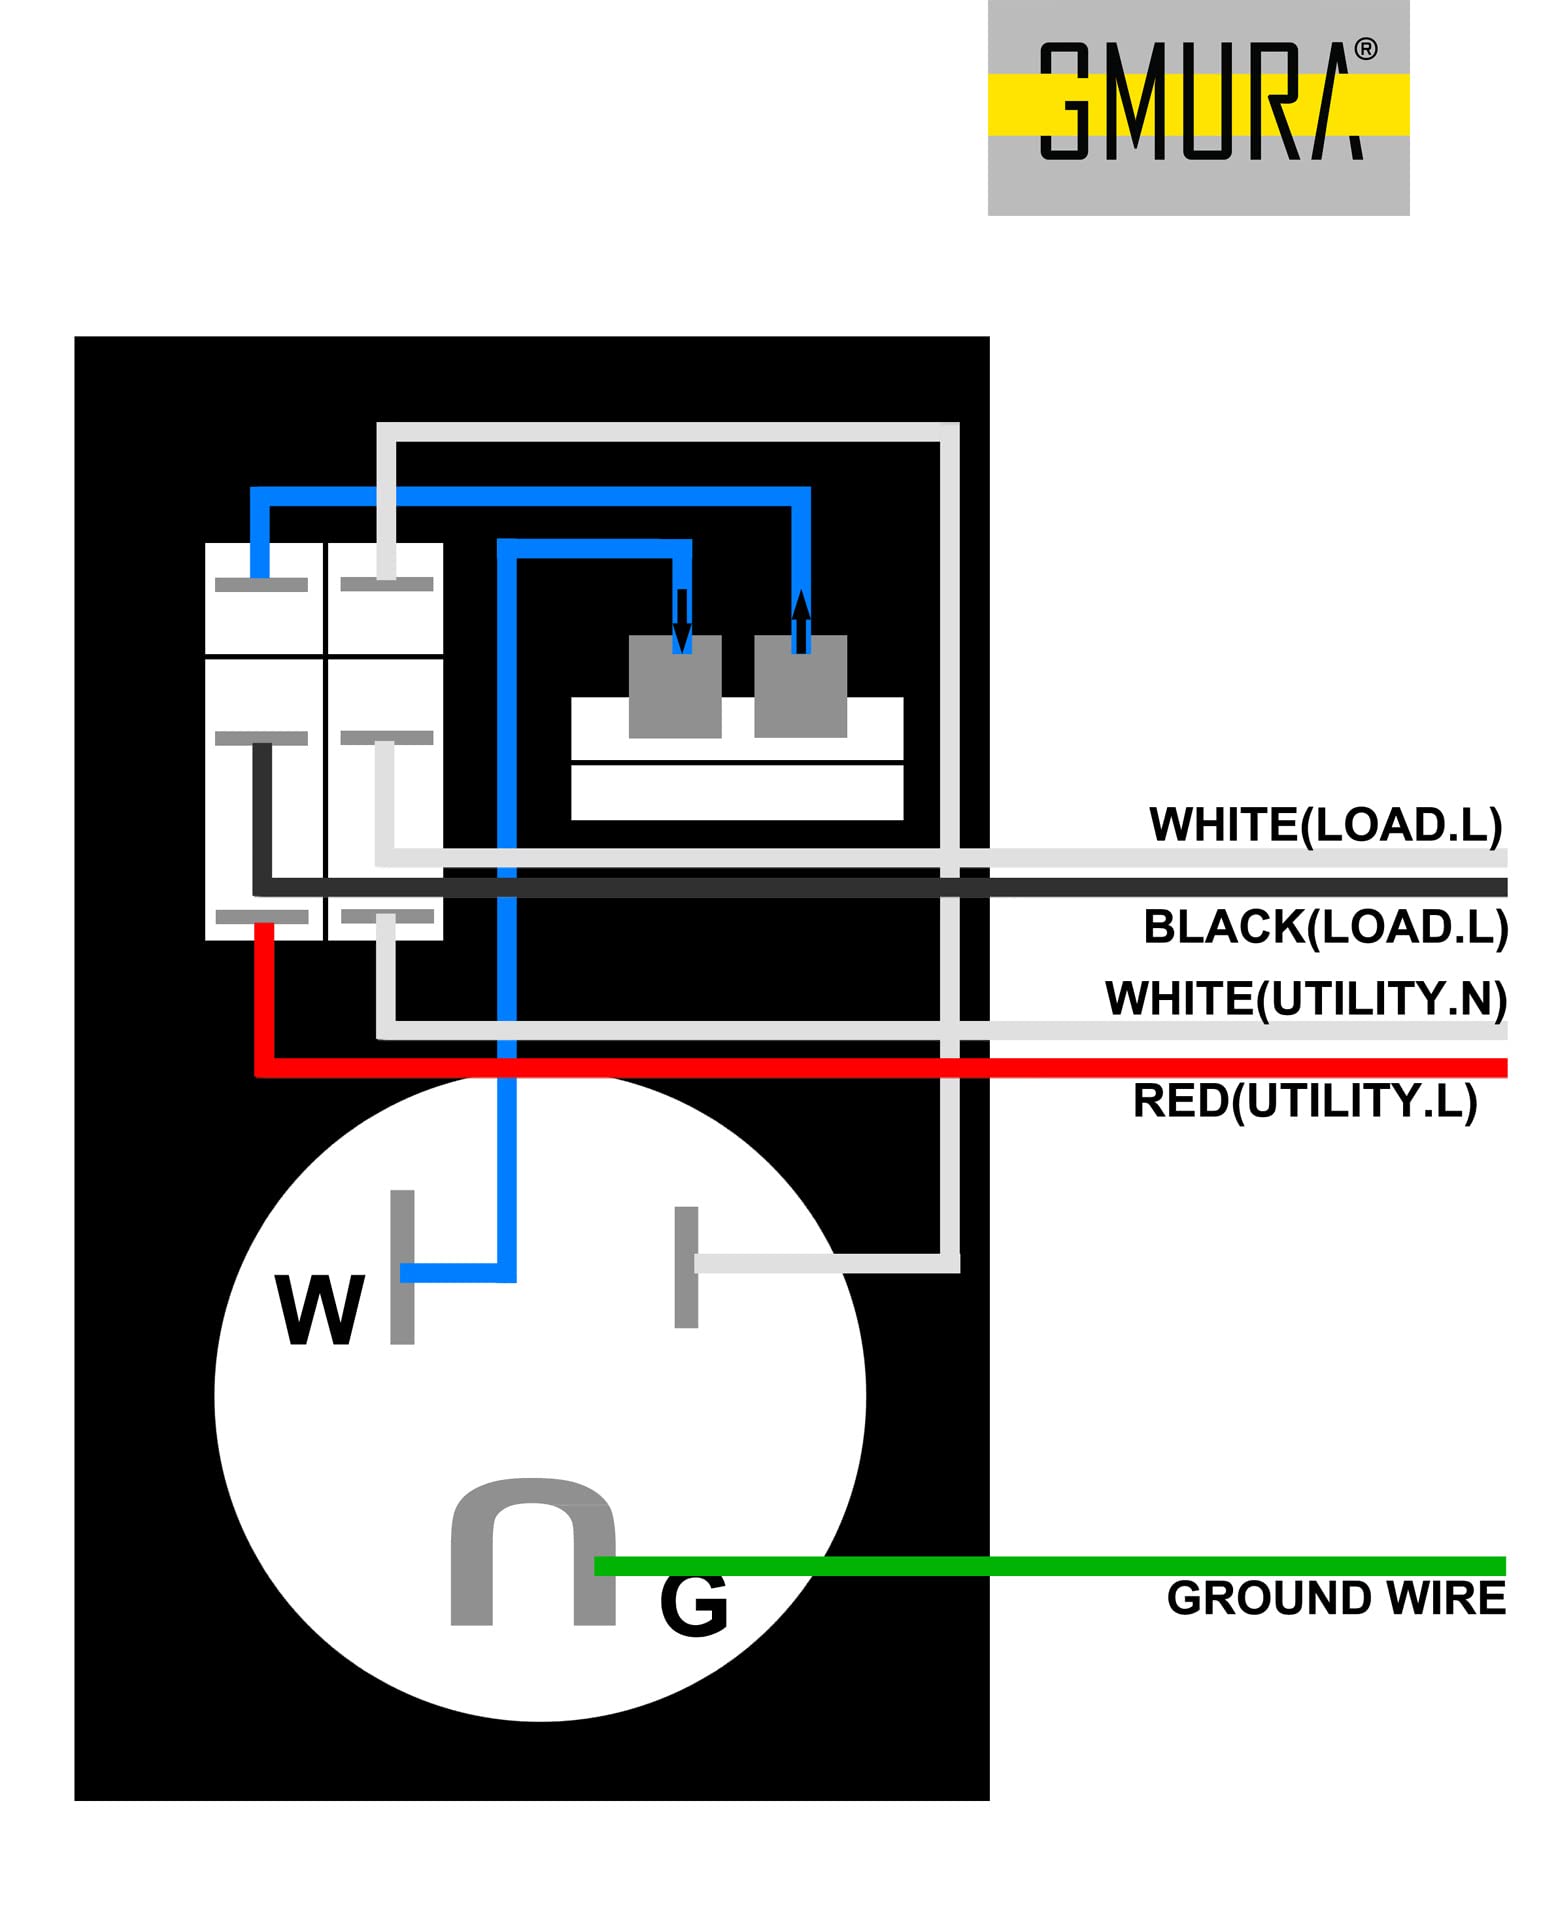 Waterproof Generator Transfer Switch NEMA 5-15P, 15 Amp 120V Transfer Switch for Generators Indoor and Outdoor, with Circuit Breaker